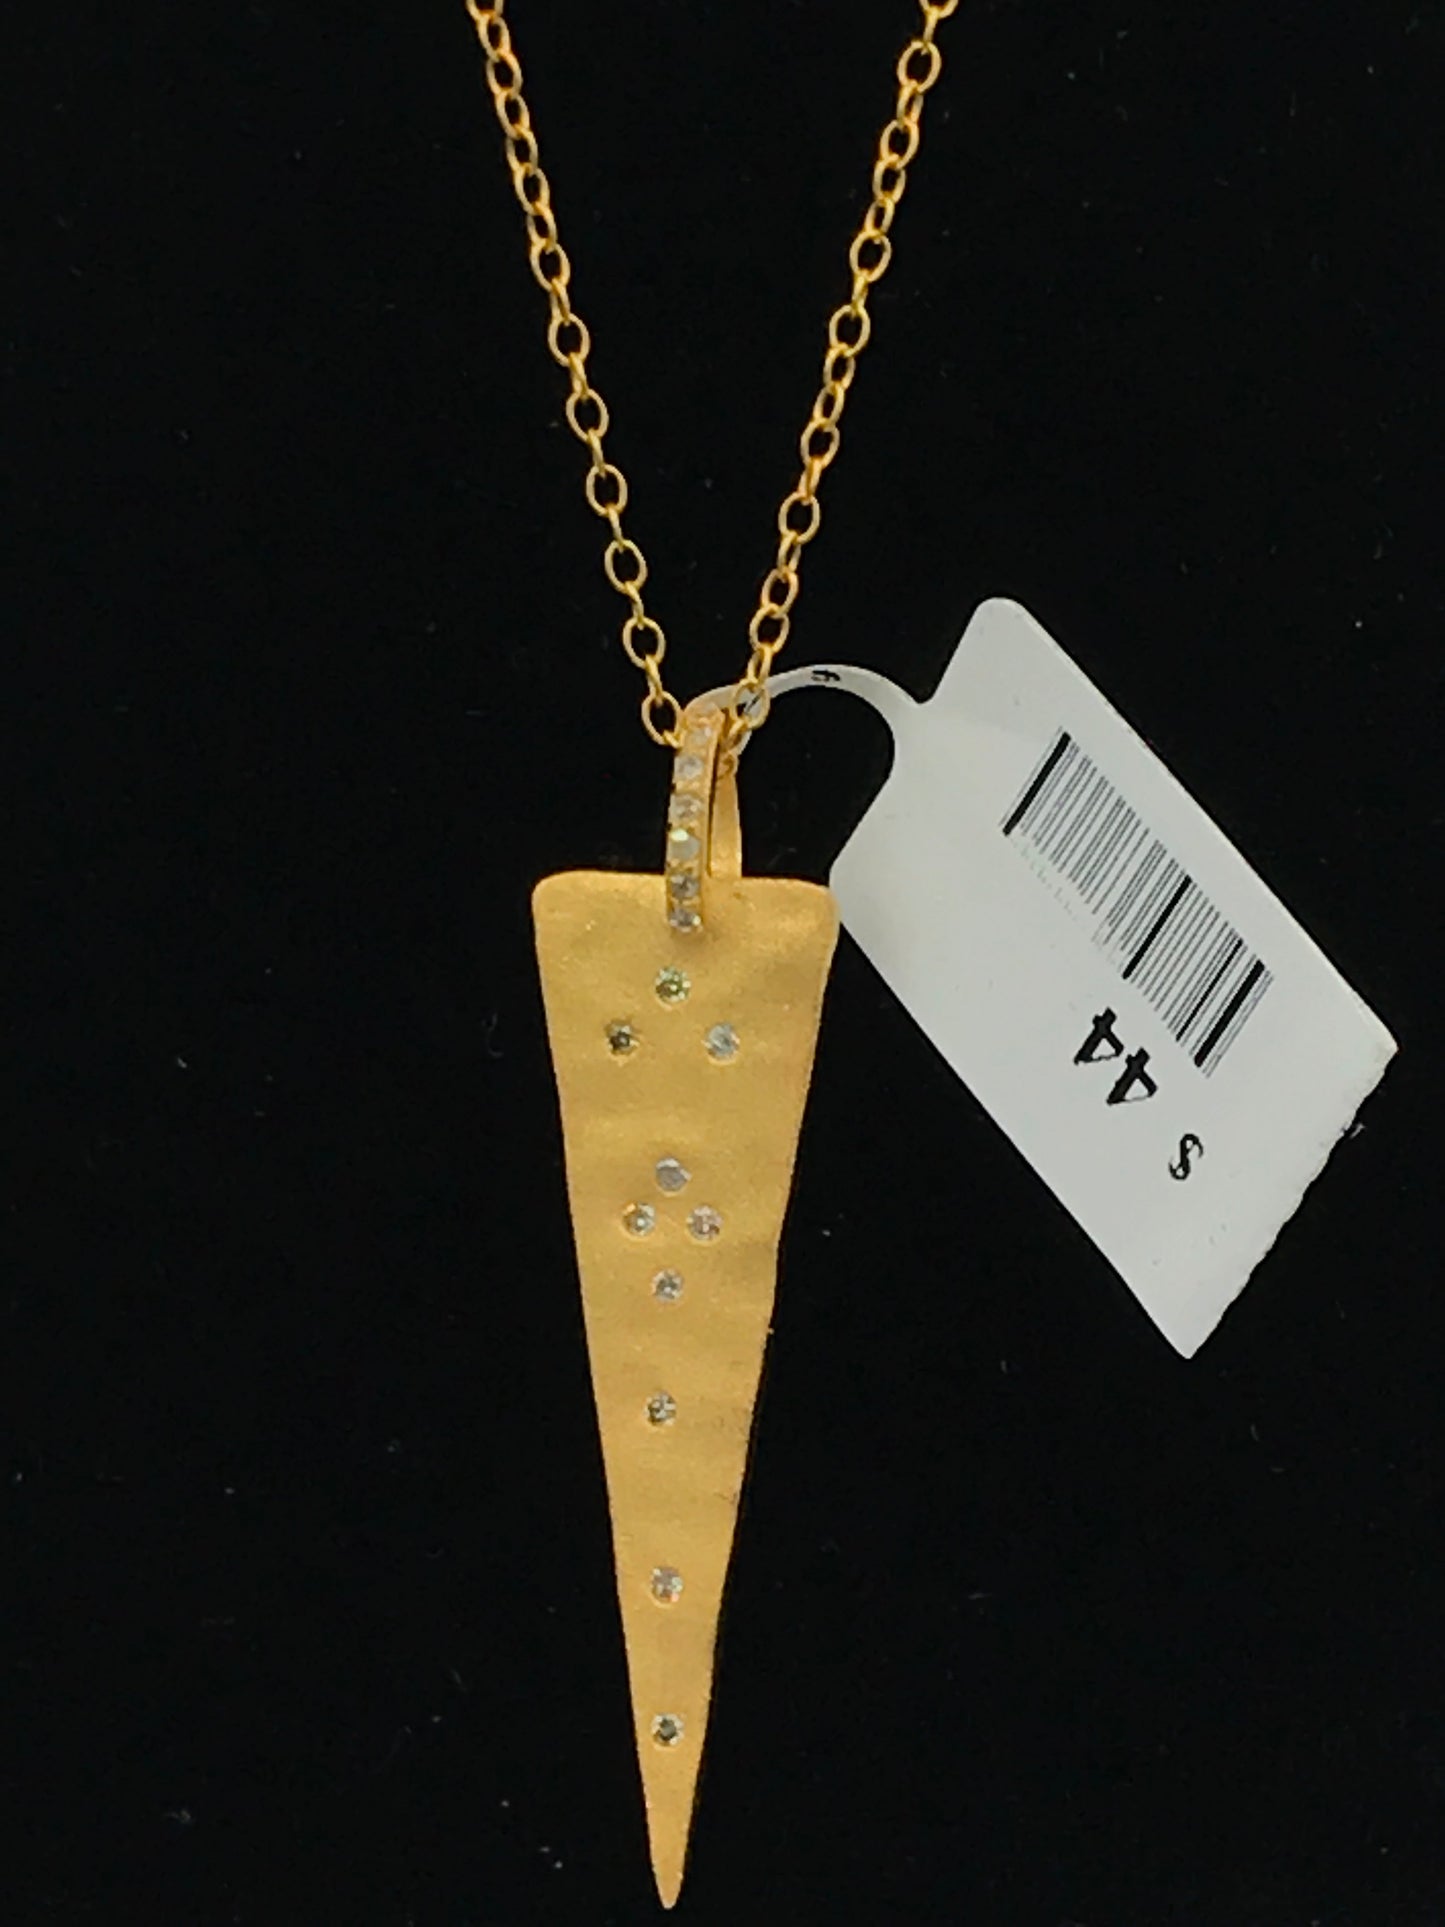 Triangle Diamond Pendant